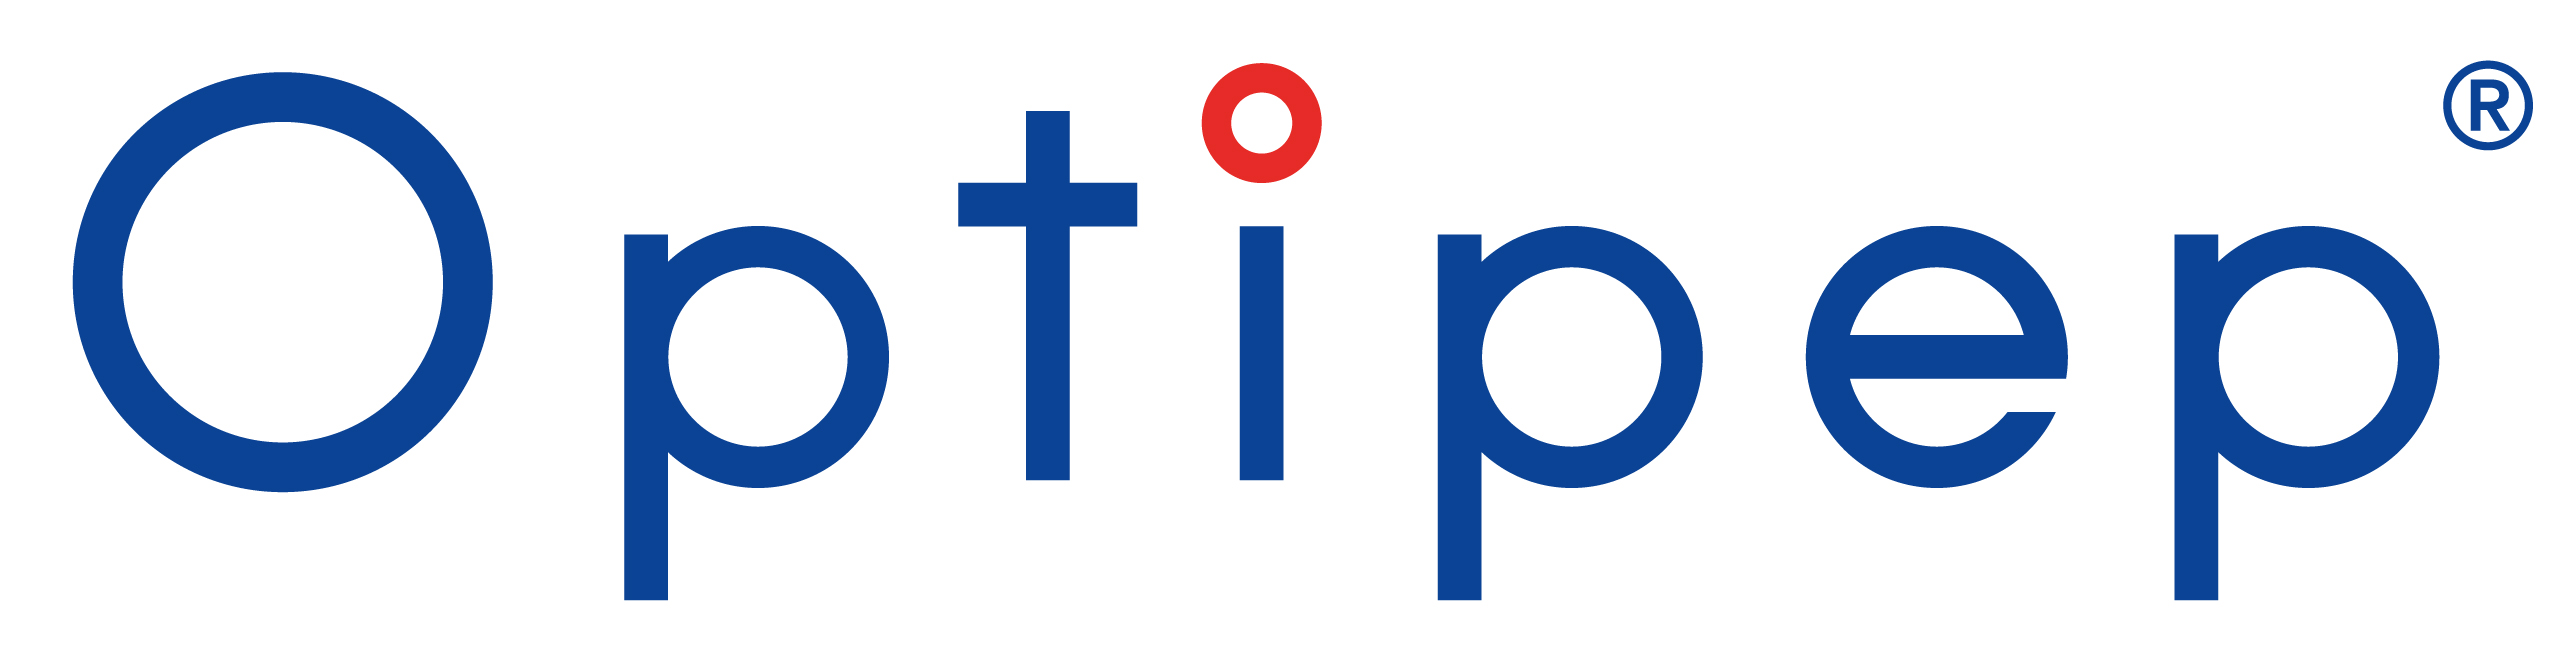 OPTI logo 2014 PMS 01